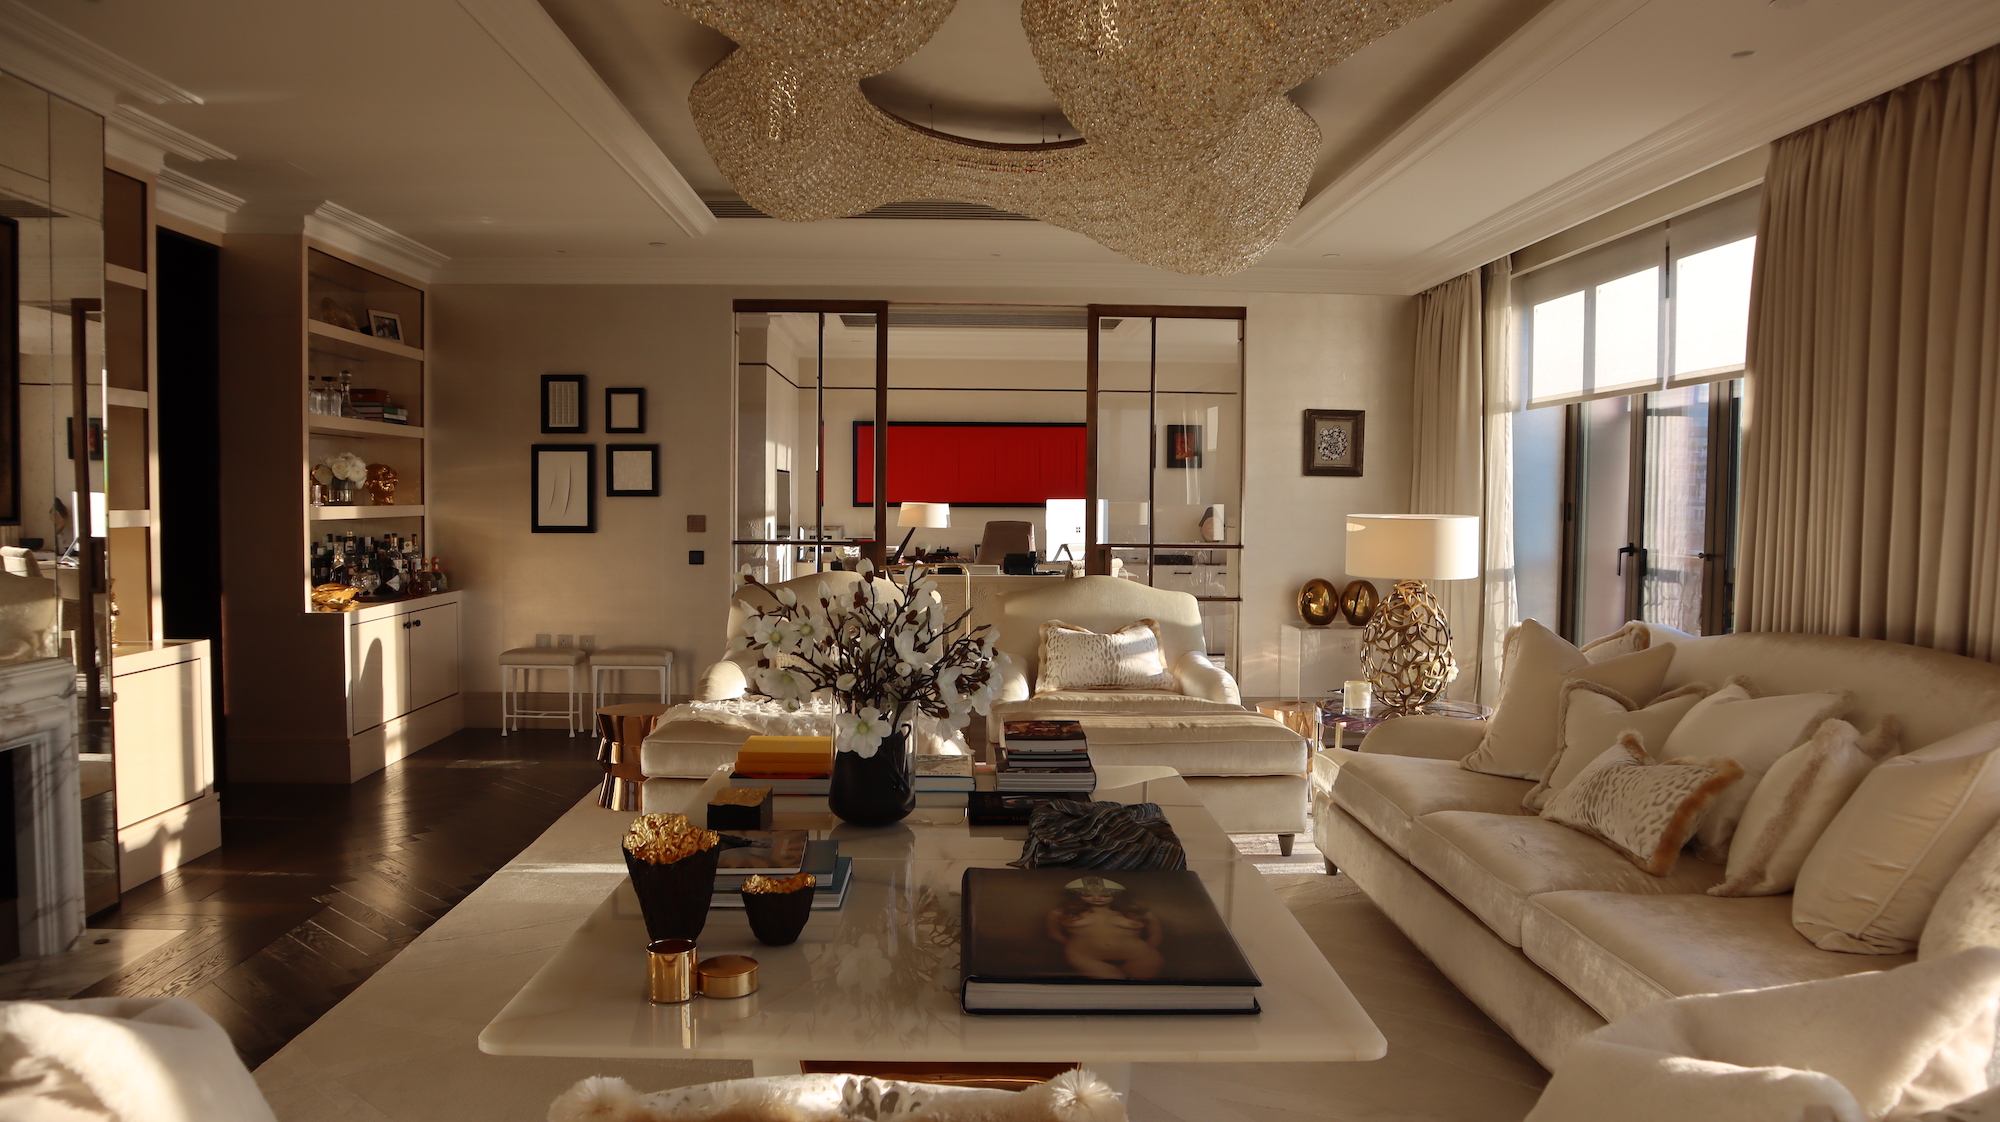 Apartment in Mayfair interior designed by Siri Schumann in Effect Magazine